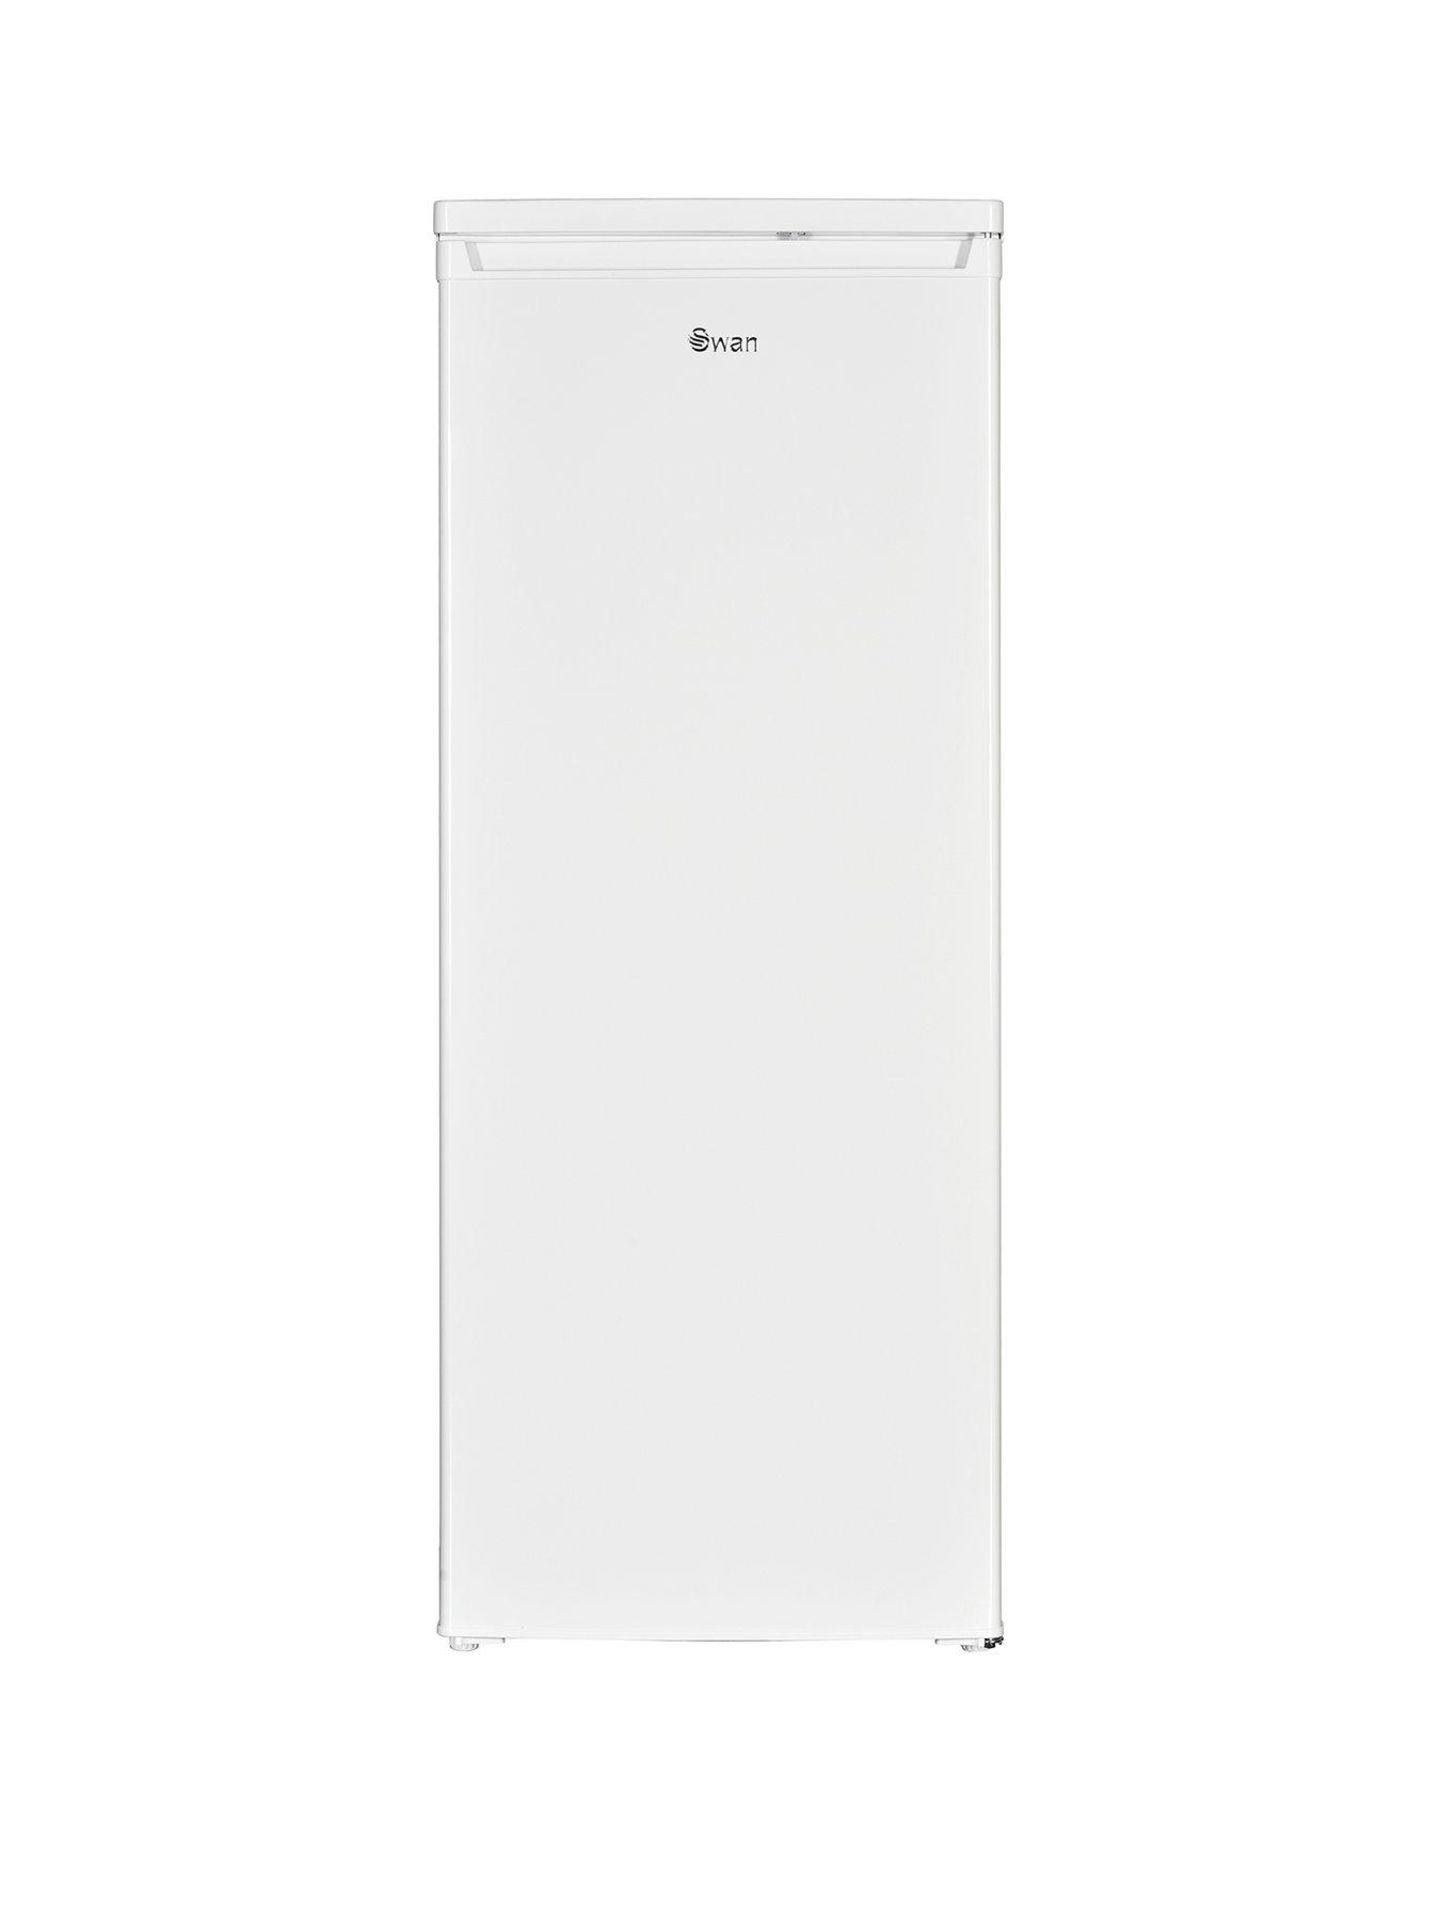 Swan sr8140w fridge [white] 143x55x58cm rrp: £262.0